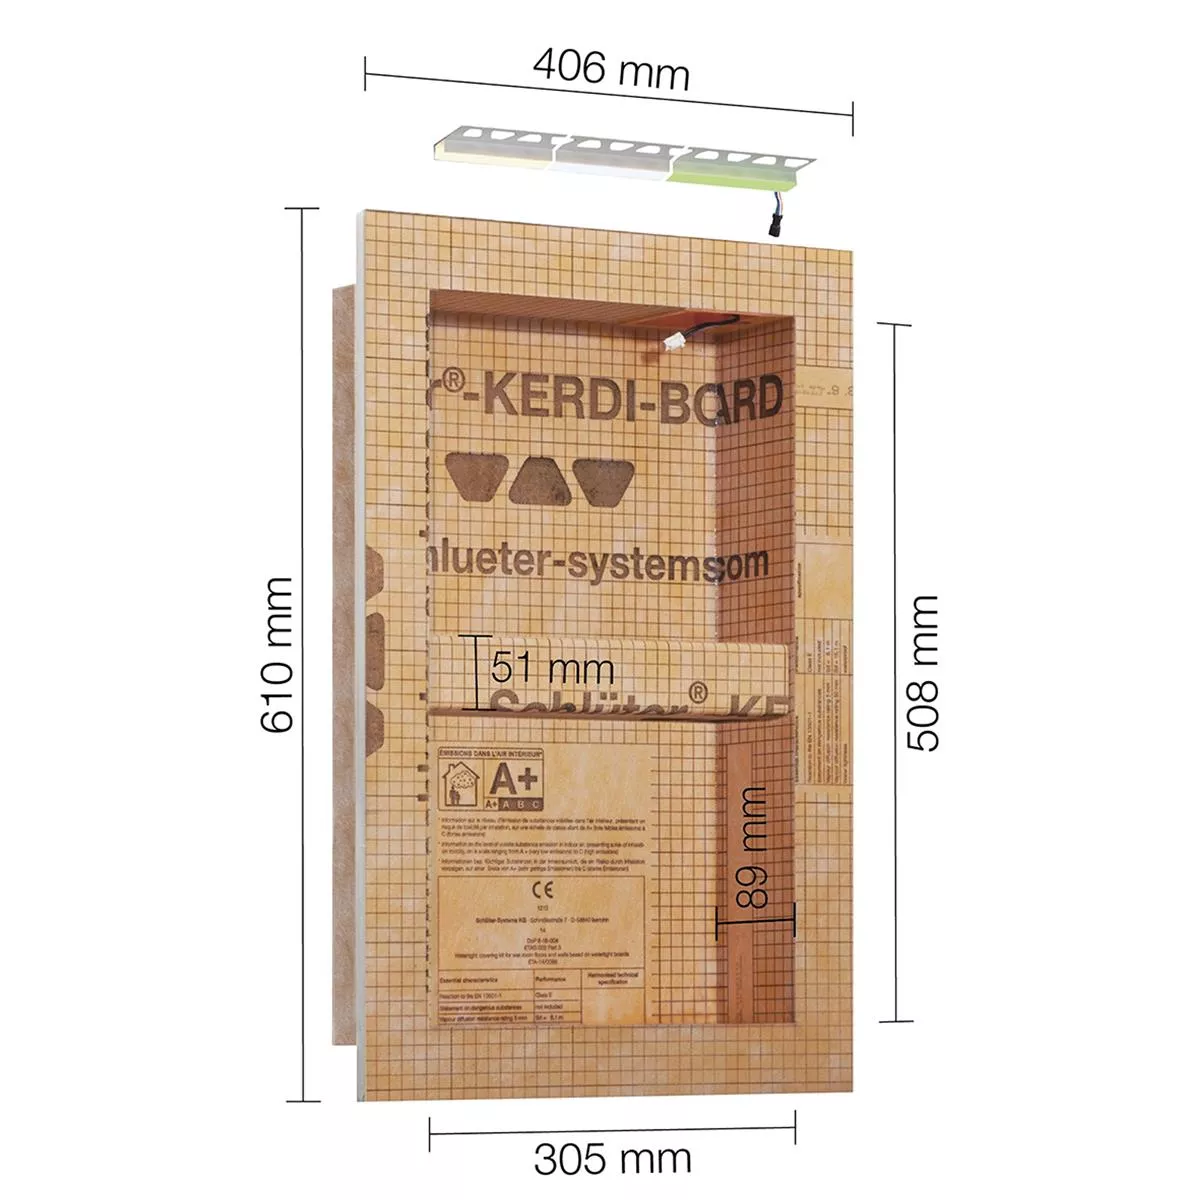 Schlüter Kerdi Board NLT výklenek set LED osvětlení neutrální bílá 30,5x50,8x0,89 cm